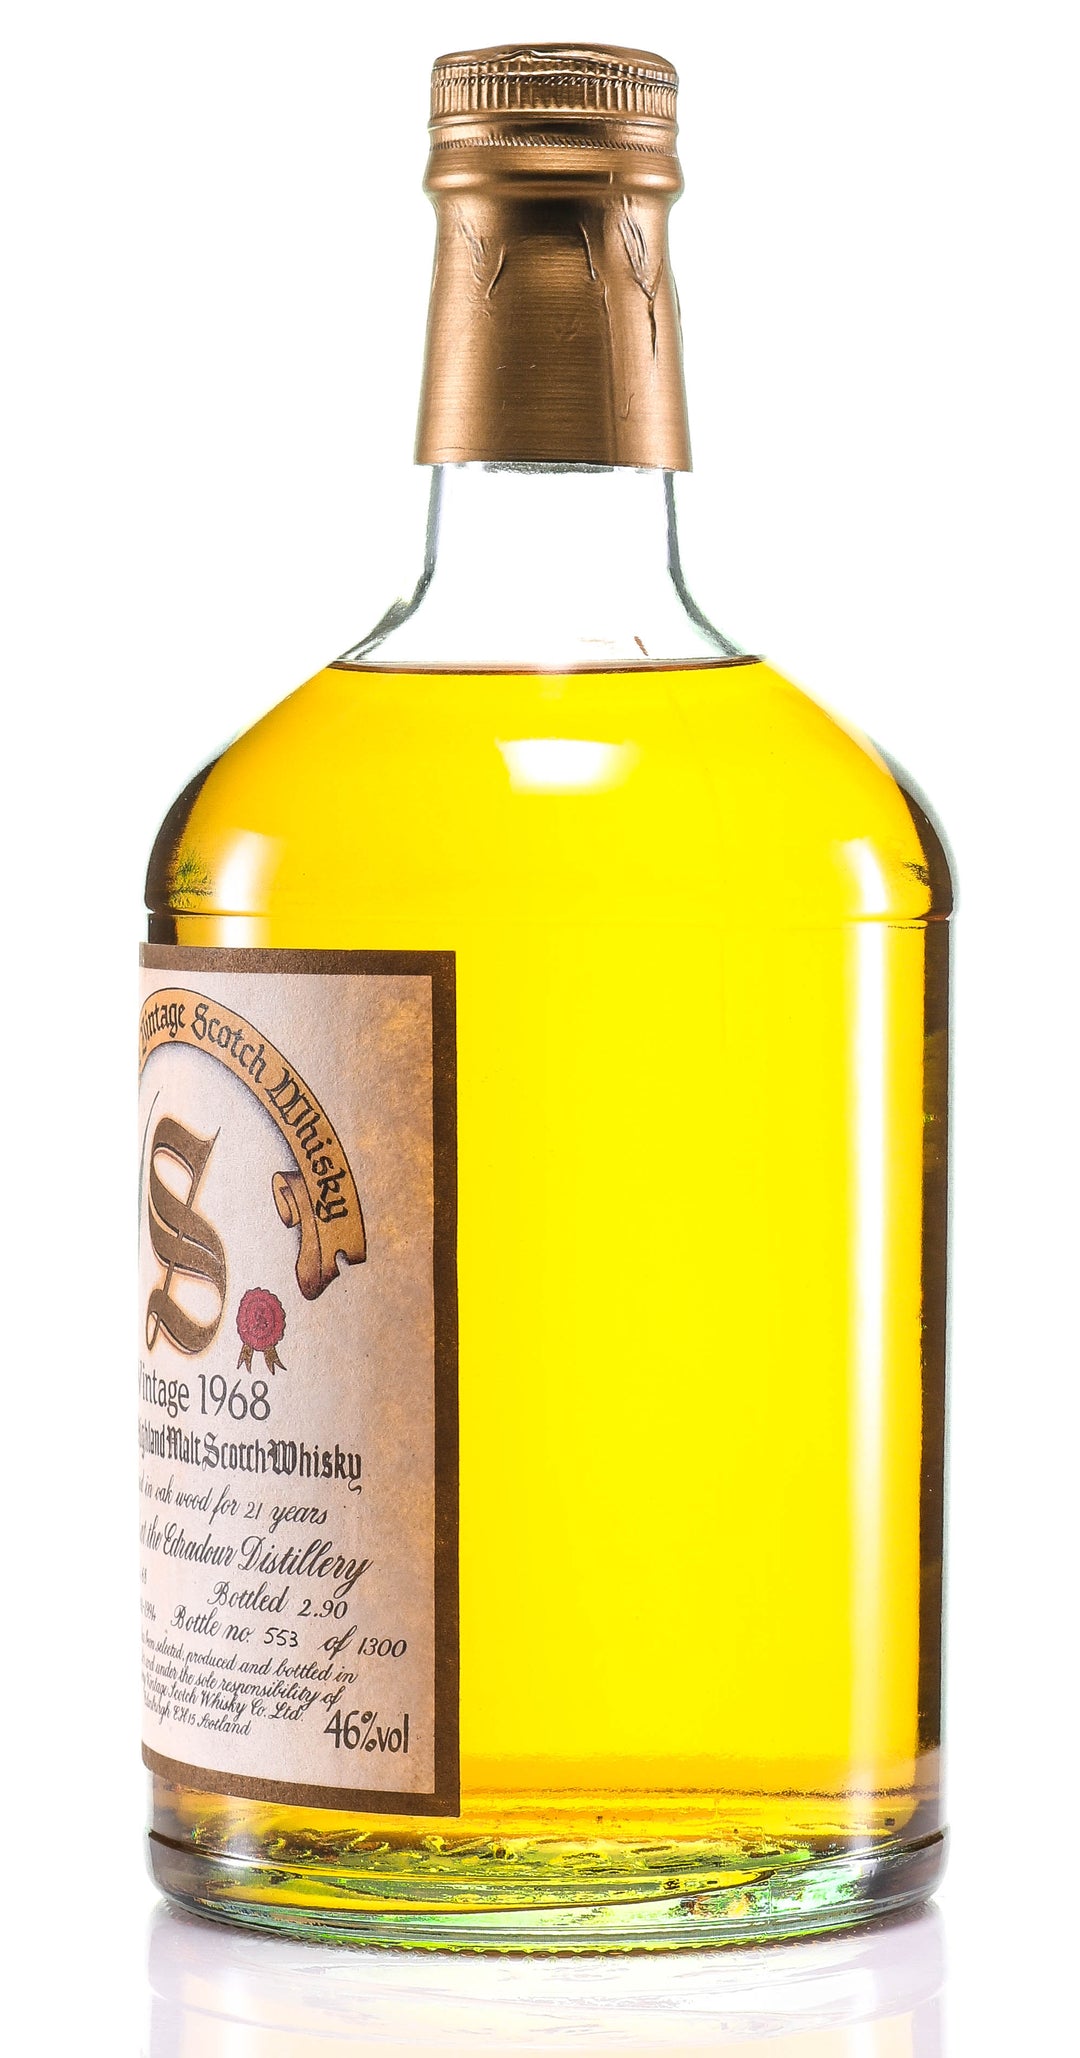 1968 Signatory Vintage Edradour 21 Year Old Single Malt Scotch Whisky - legendaryvintages